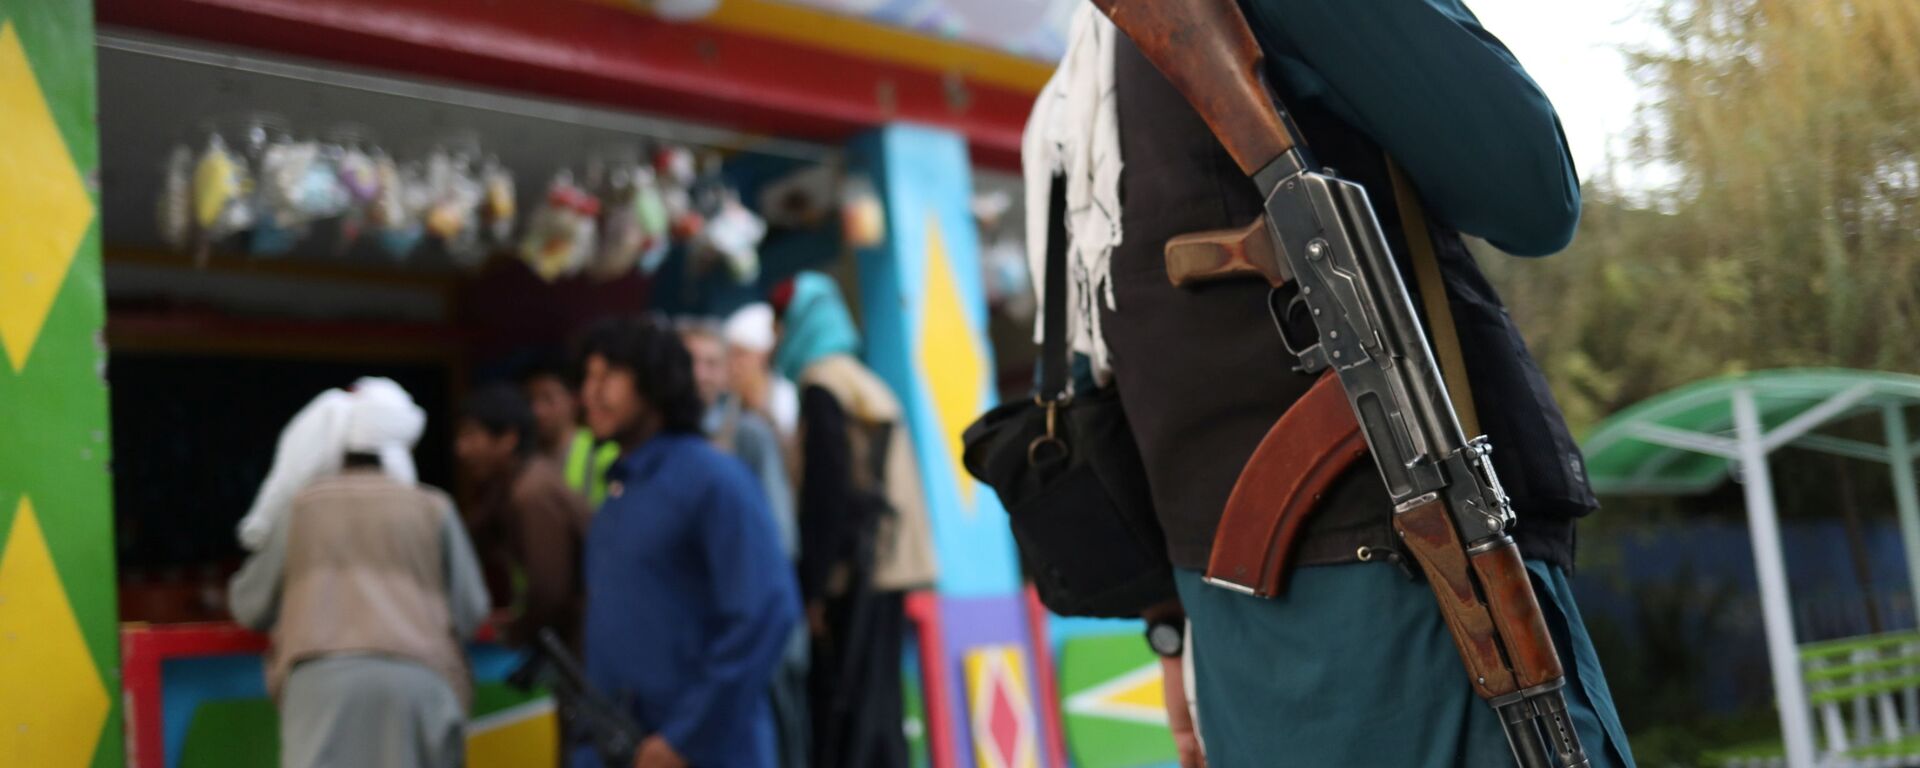 Боец Талибана* с винтовкой в парке развлечений в Кабуле - Sputnik Узбекистан, 1920, 15.09.2021